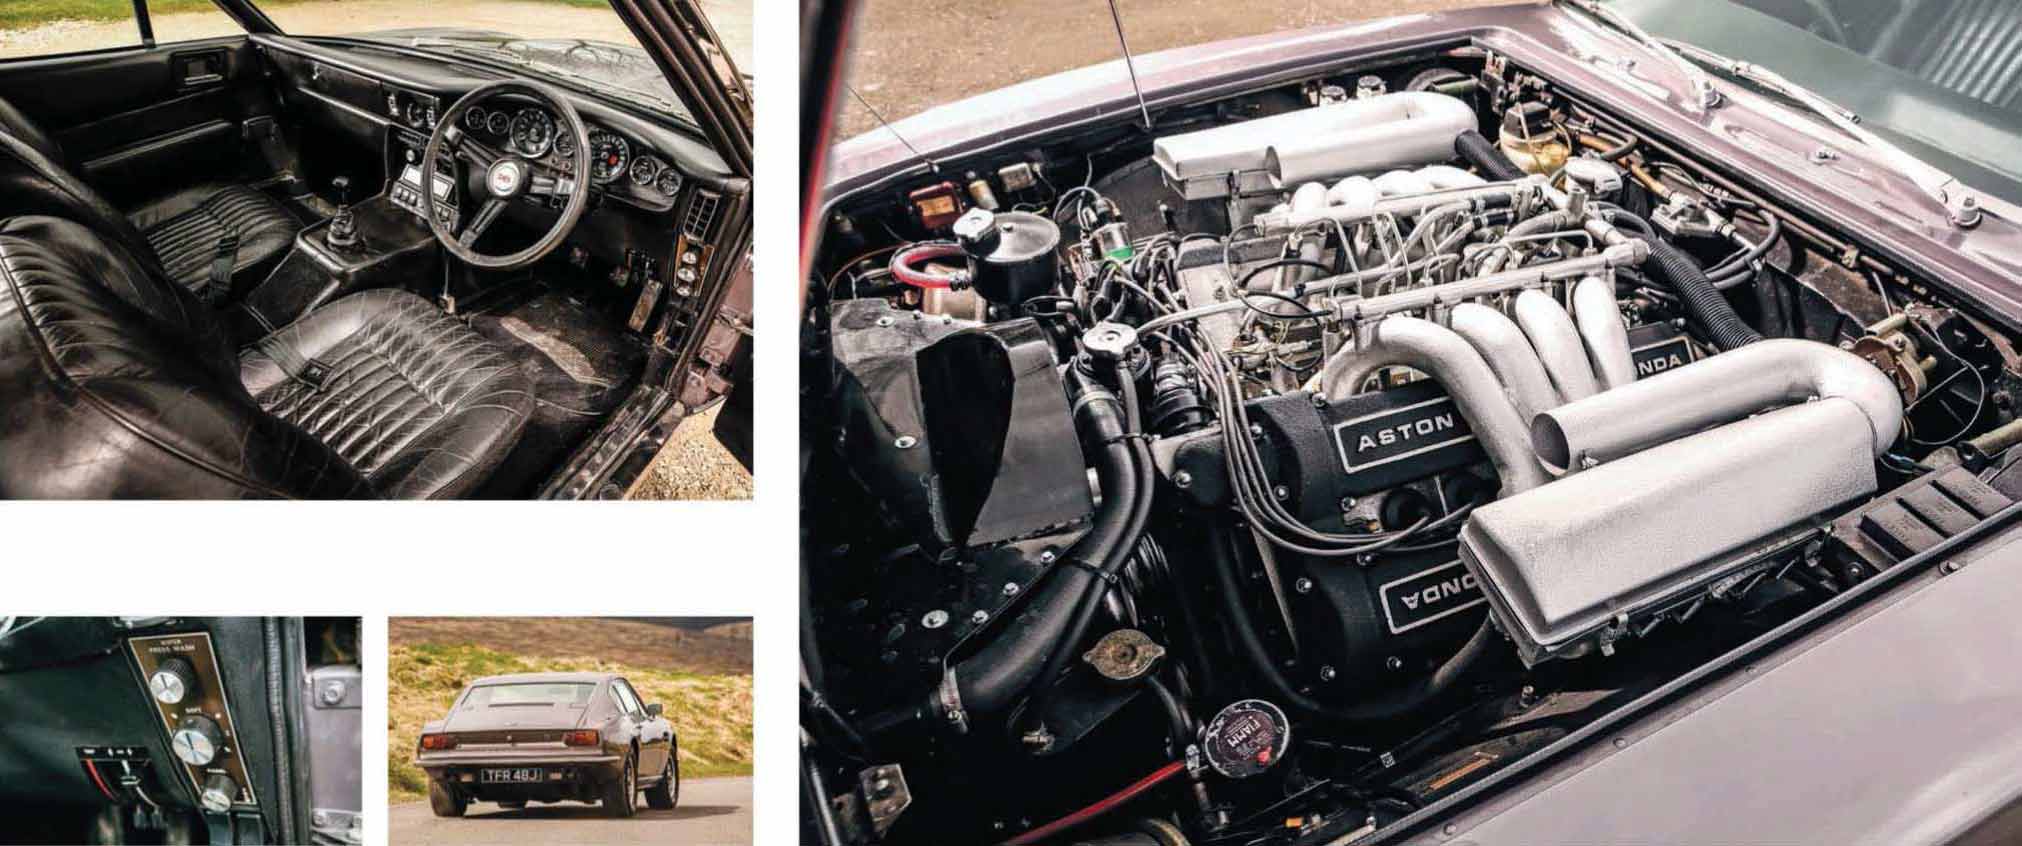 1971 Aston Martin DBS V8 FI Manual